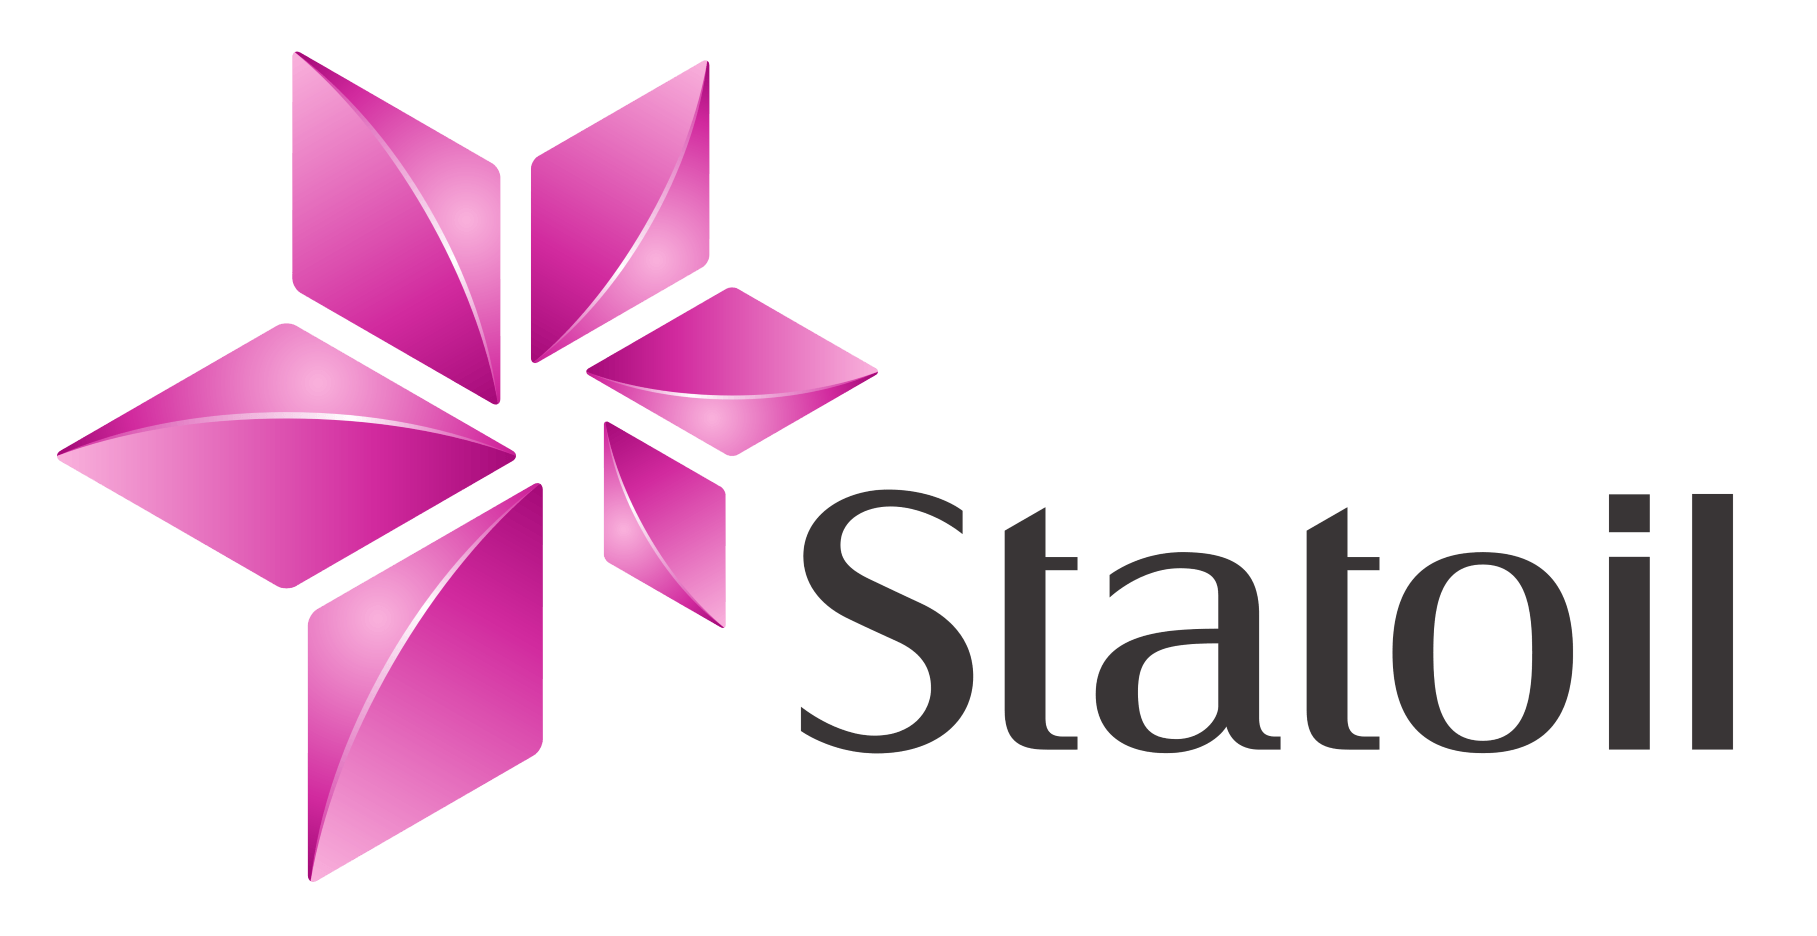 Statoil Logo - Statoil – Logos Download